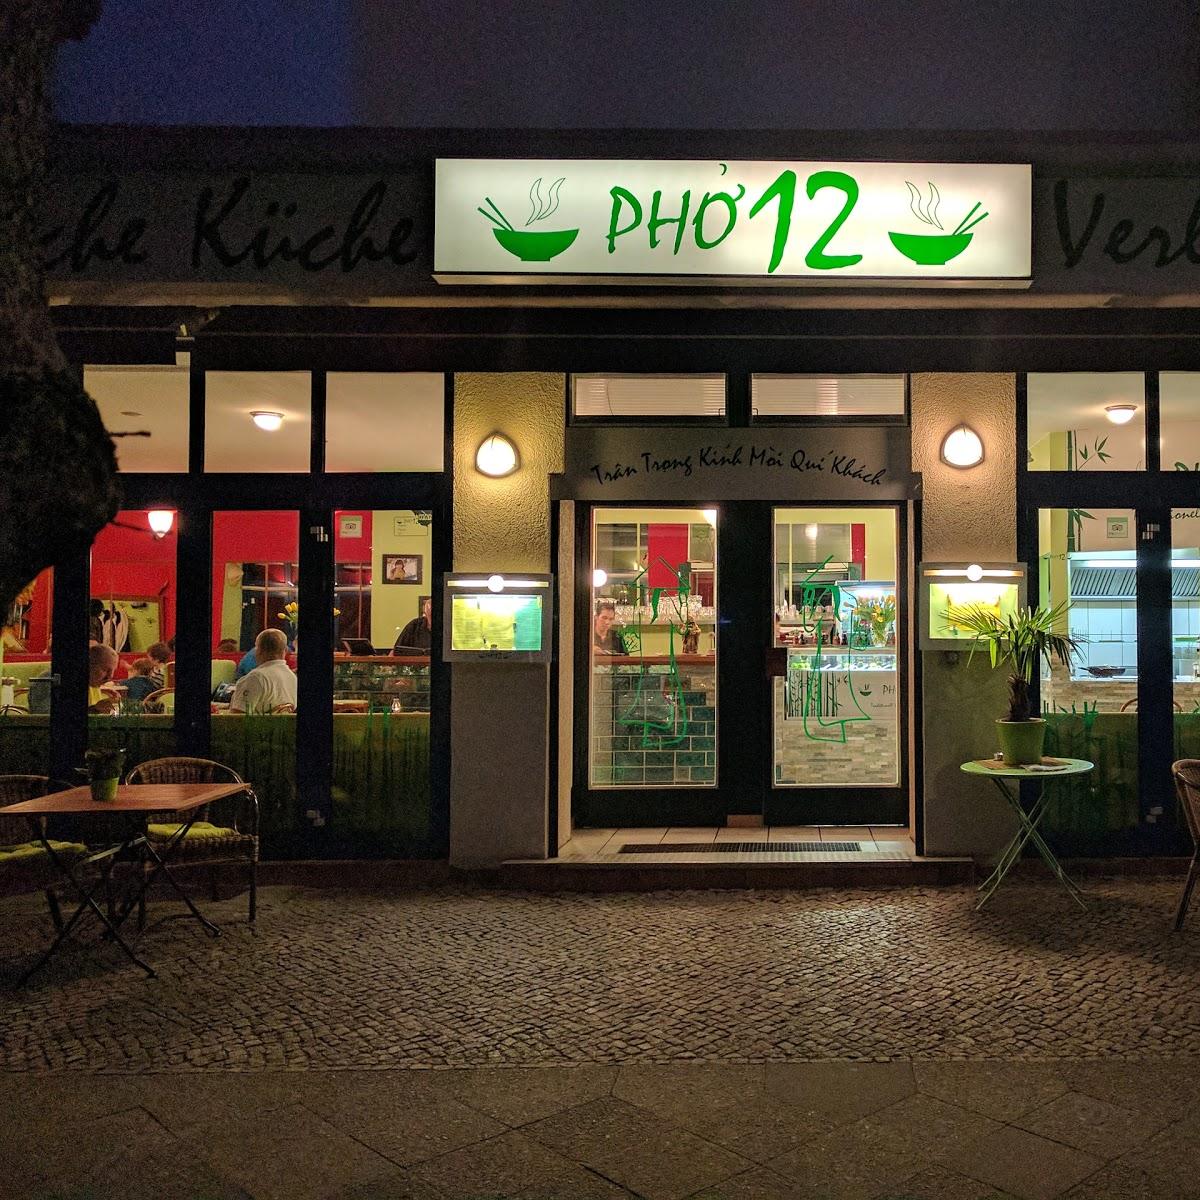 Restaurant "Pho 12" in Berlin